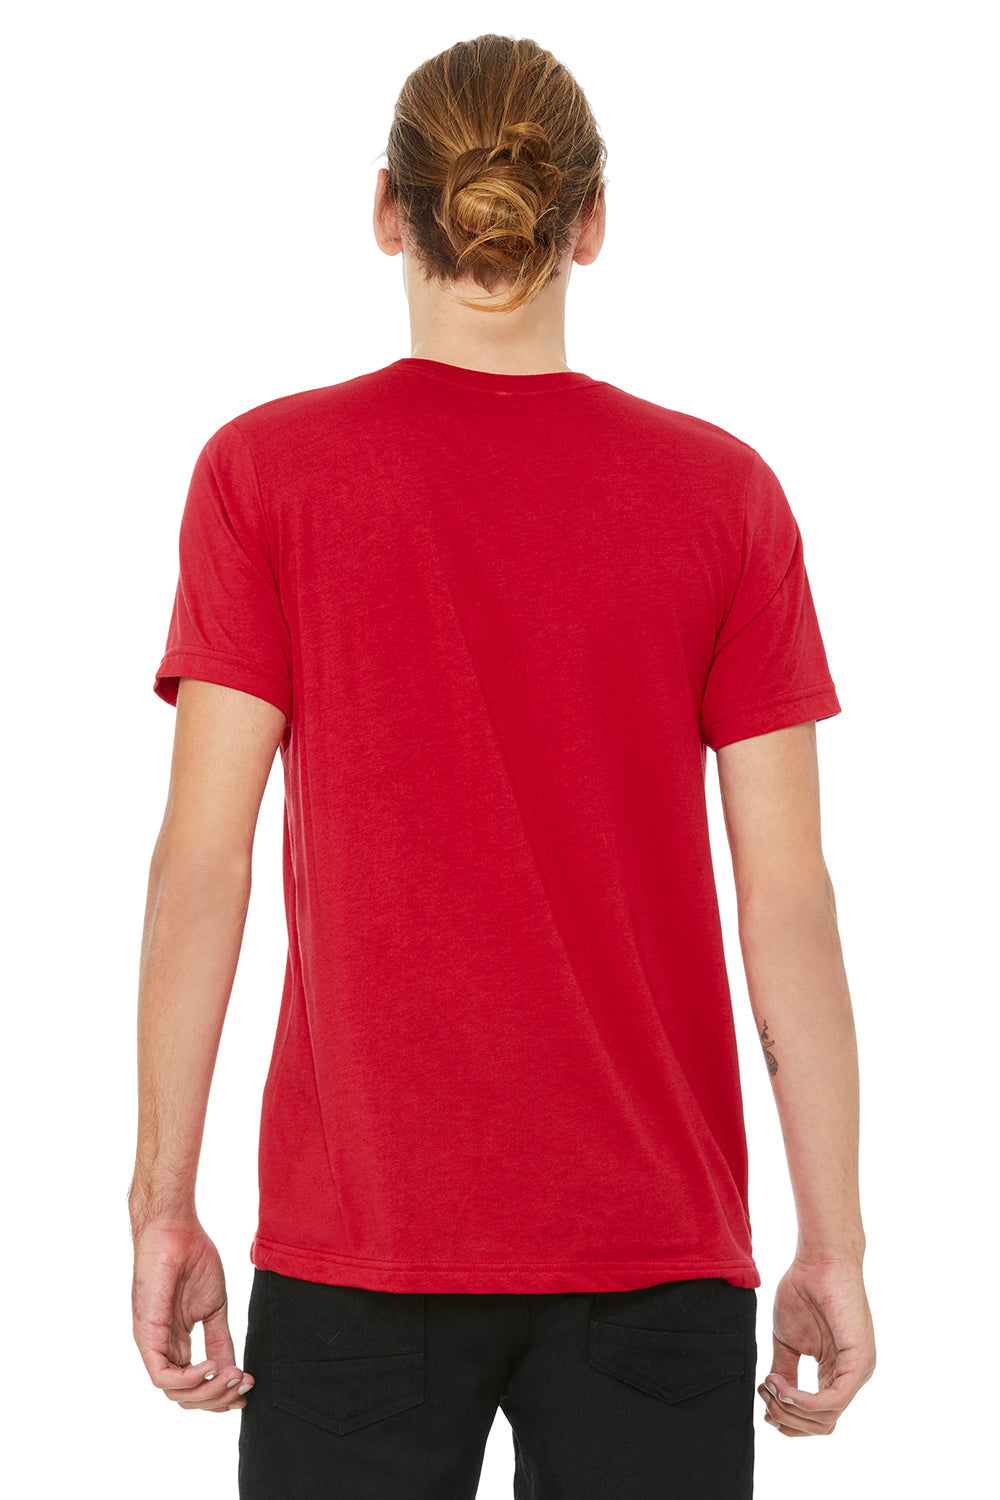 Bella + Canvas BC3650/3650 Mens Short Sleeve Crewneck T-Shirt Red Model Back